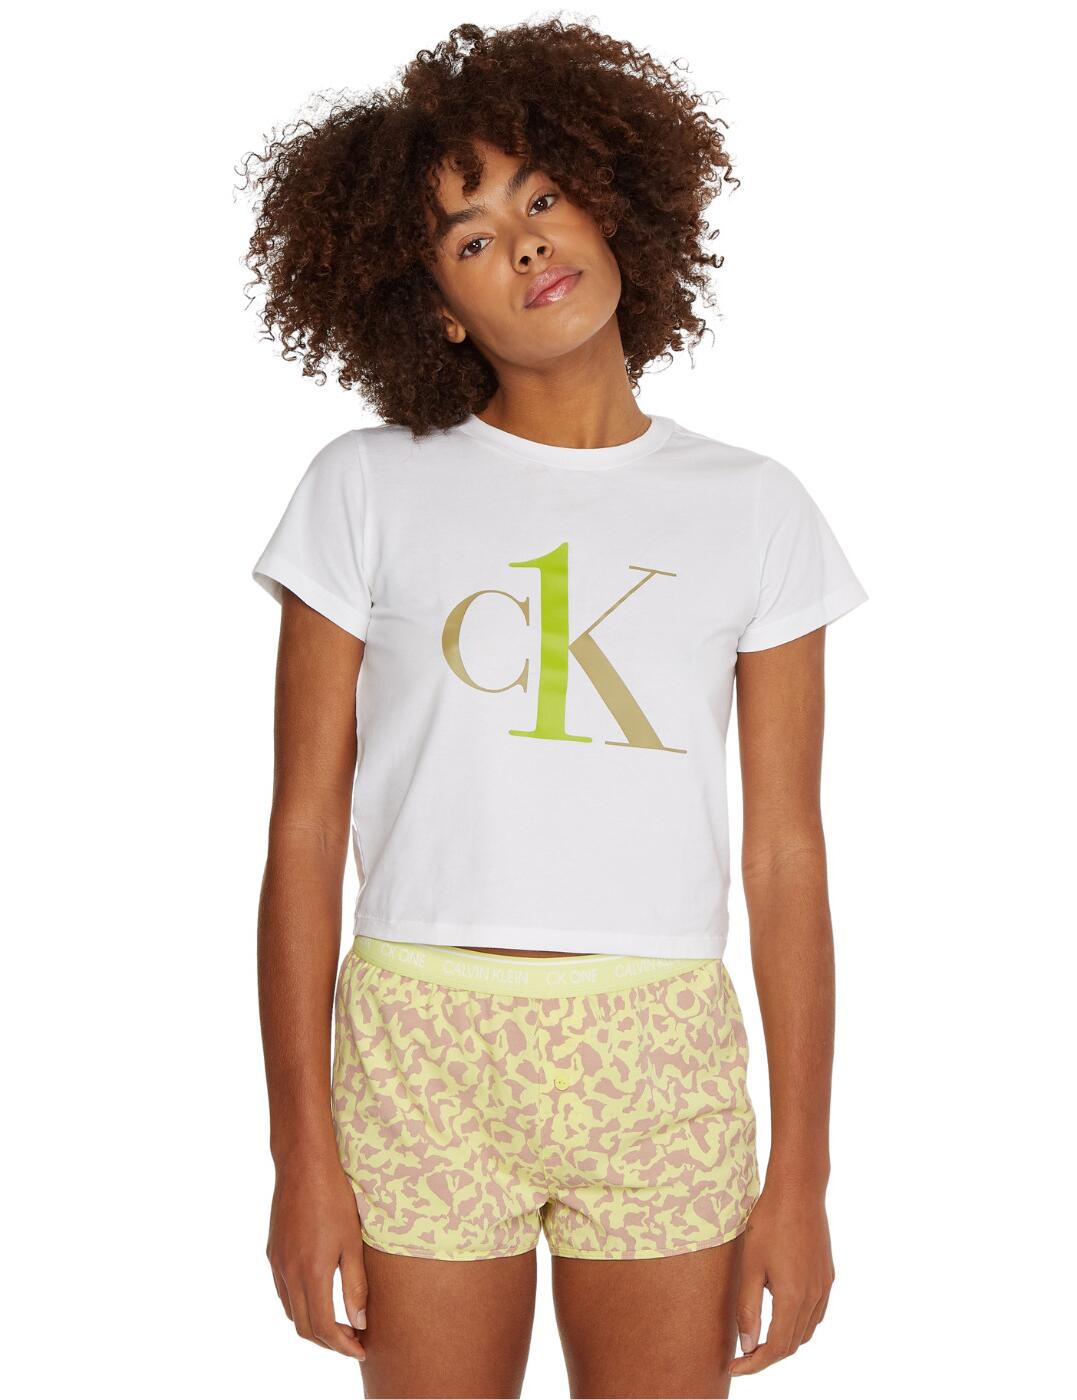 CK One Calvin Klein Short PJ Set White/Cyber Green